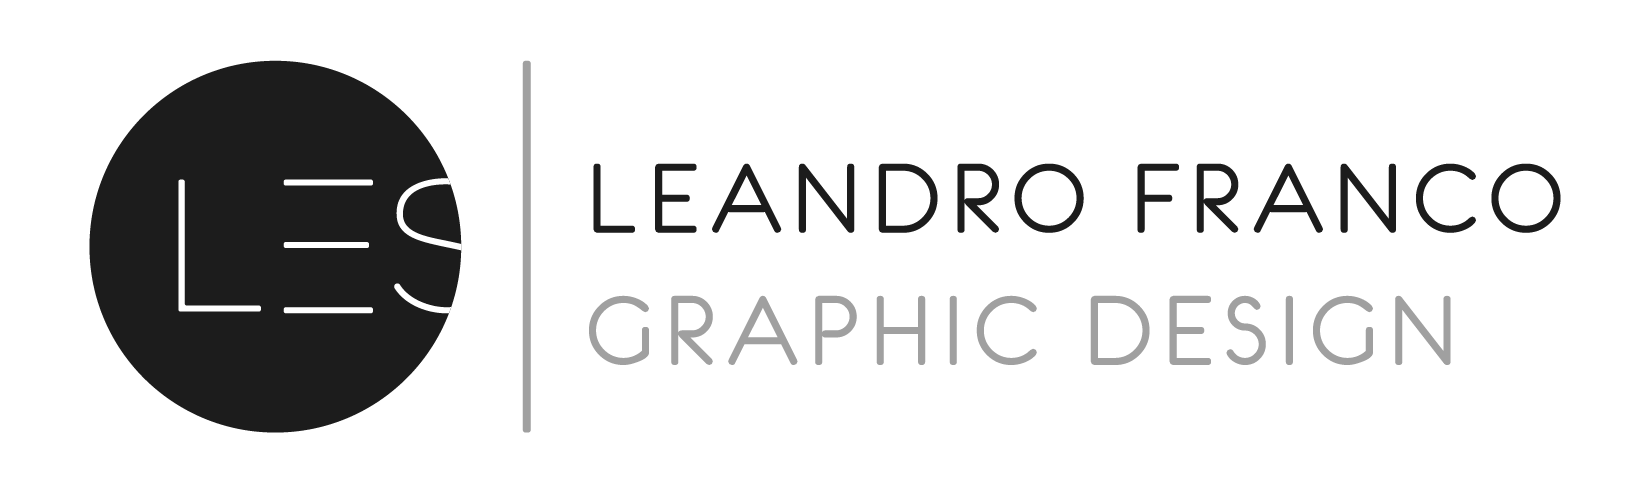 leandro franco logotipo